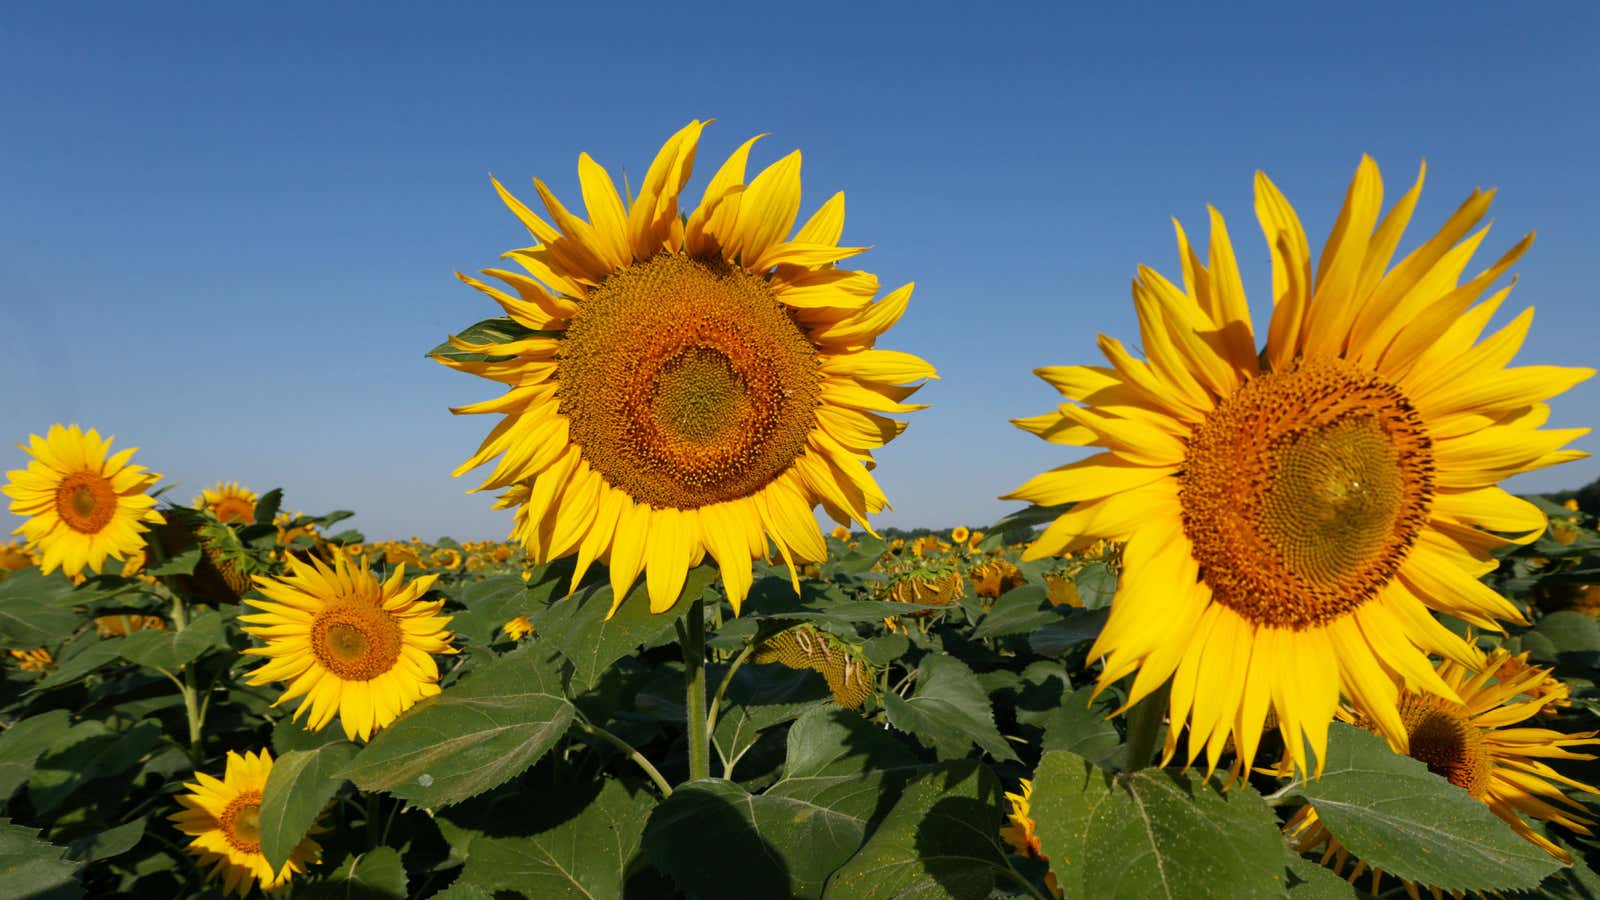 Sunflowers in the Kiev region of Ukraine.